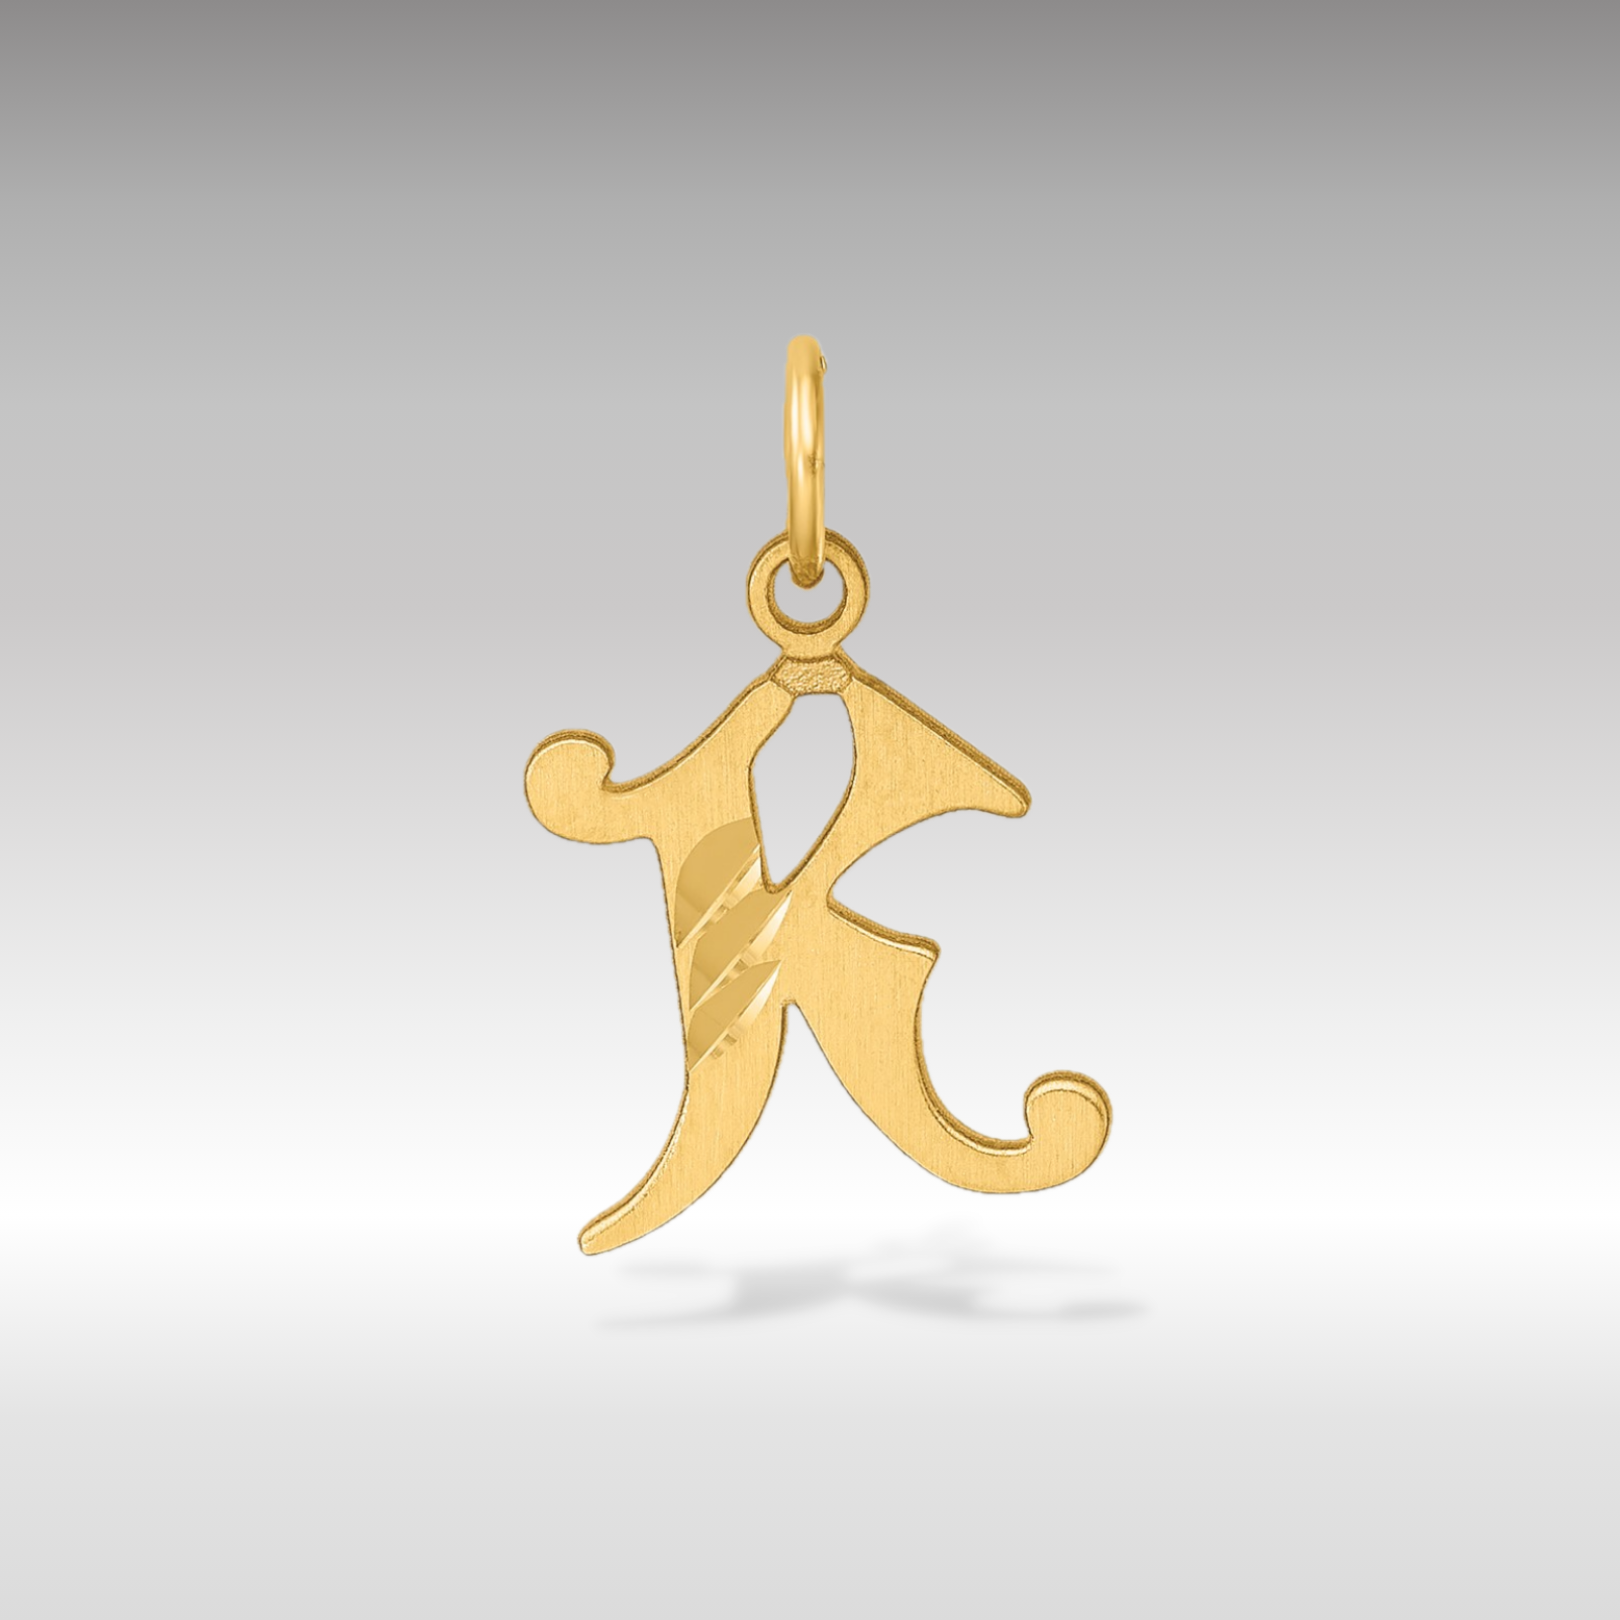 14K Gold Elegant Letter 'K' Charm - Charlie & Co. Jewelry